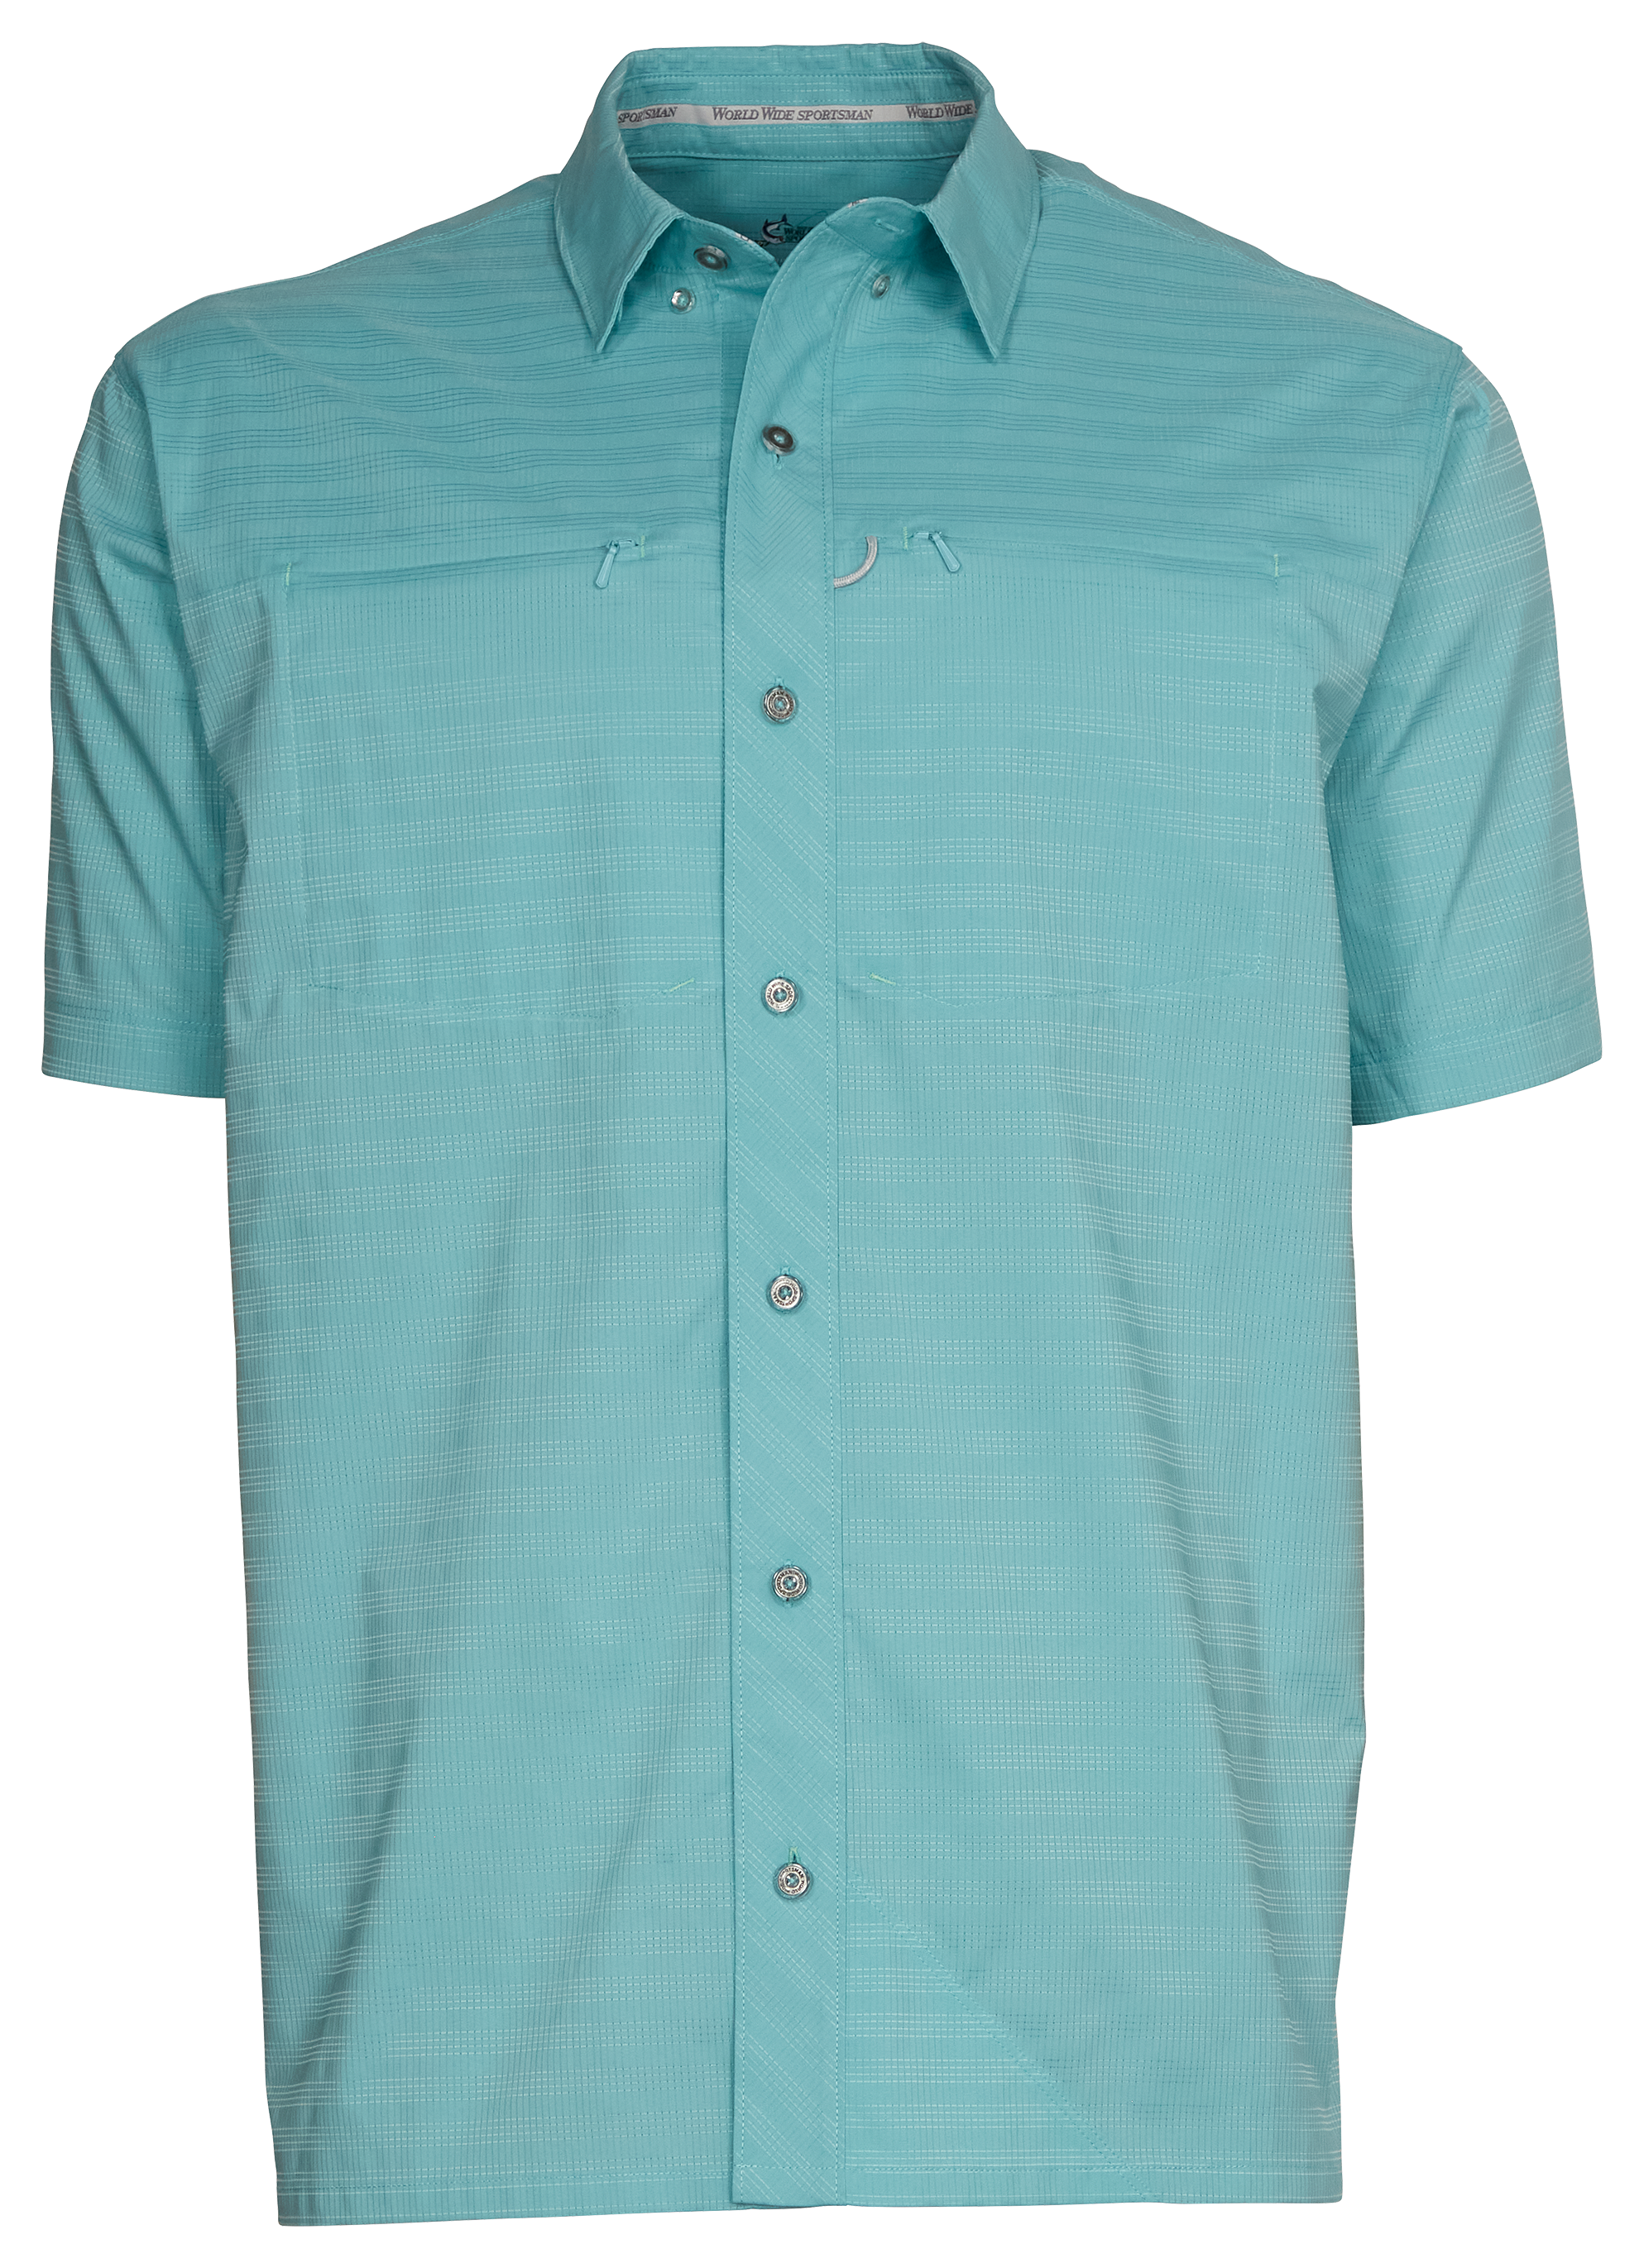 World Wide Sportsman Seacrest 2-Pocket Short-Sleeve Button-Down Shirt for Men - Reef Waters - 2XL